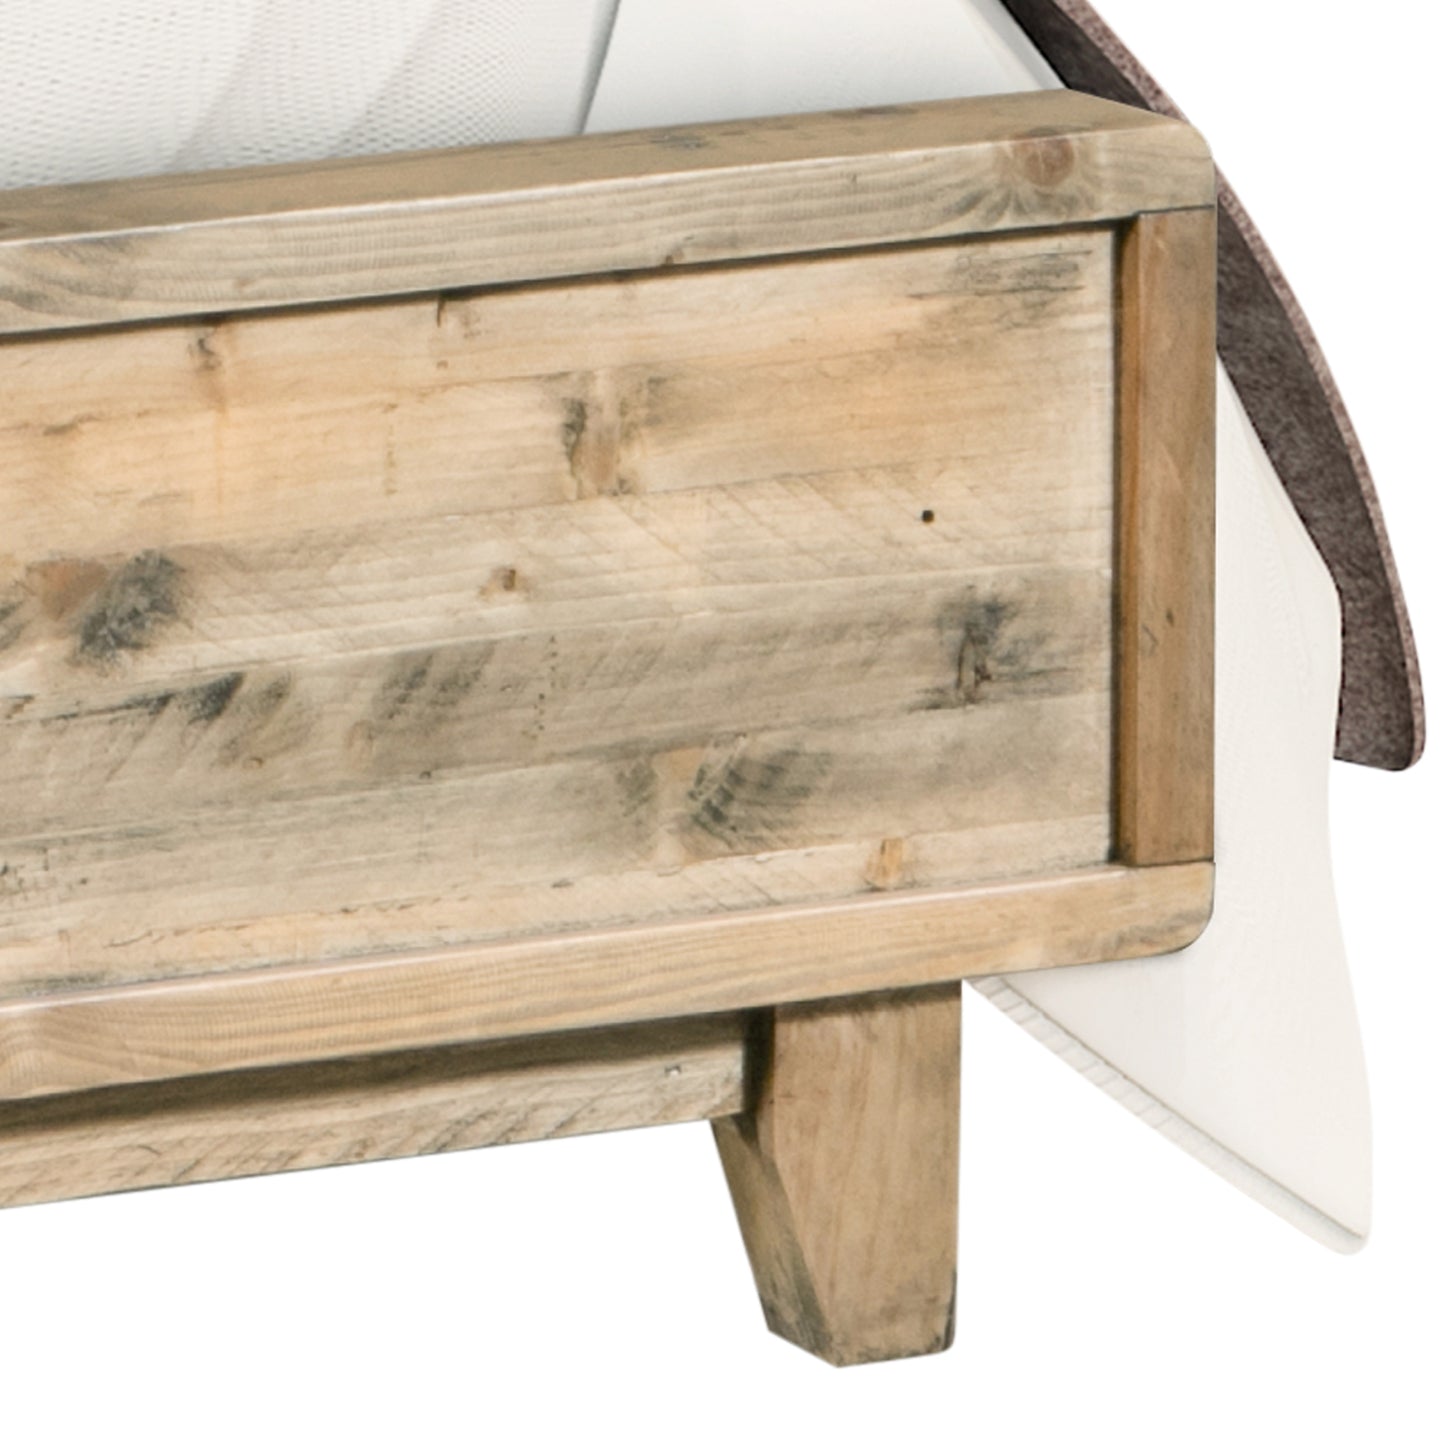 Nalini Wooden Bed Frame in Solid Wood Antique Design - Light Brown Queen